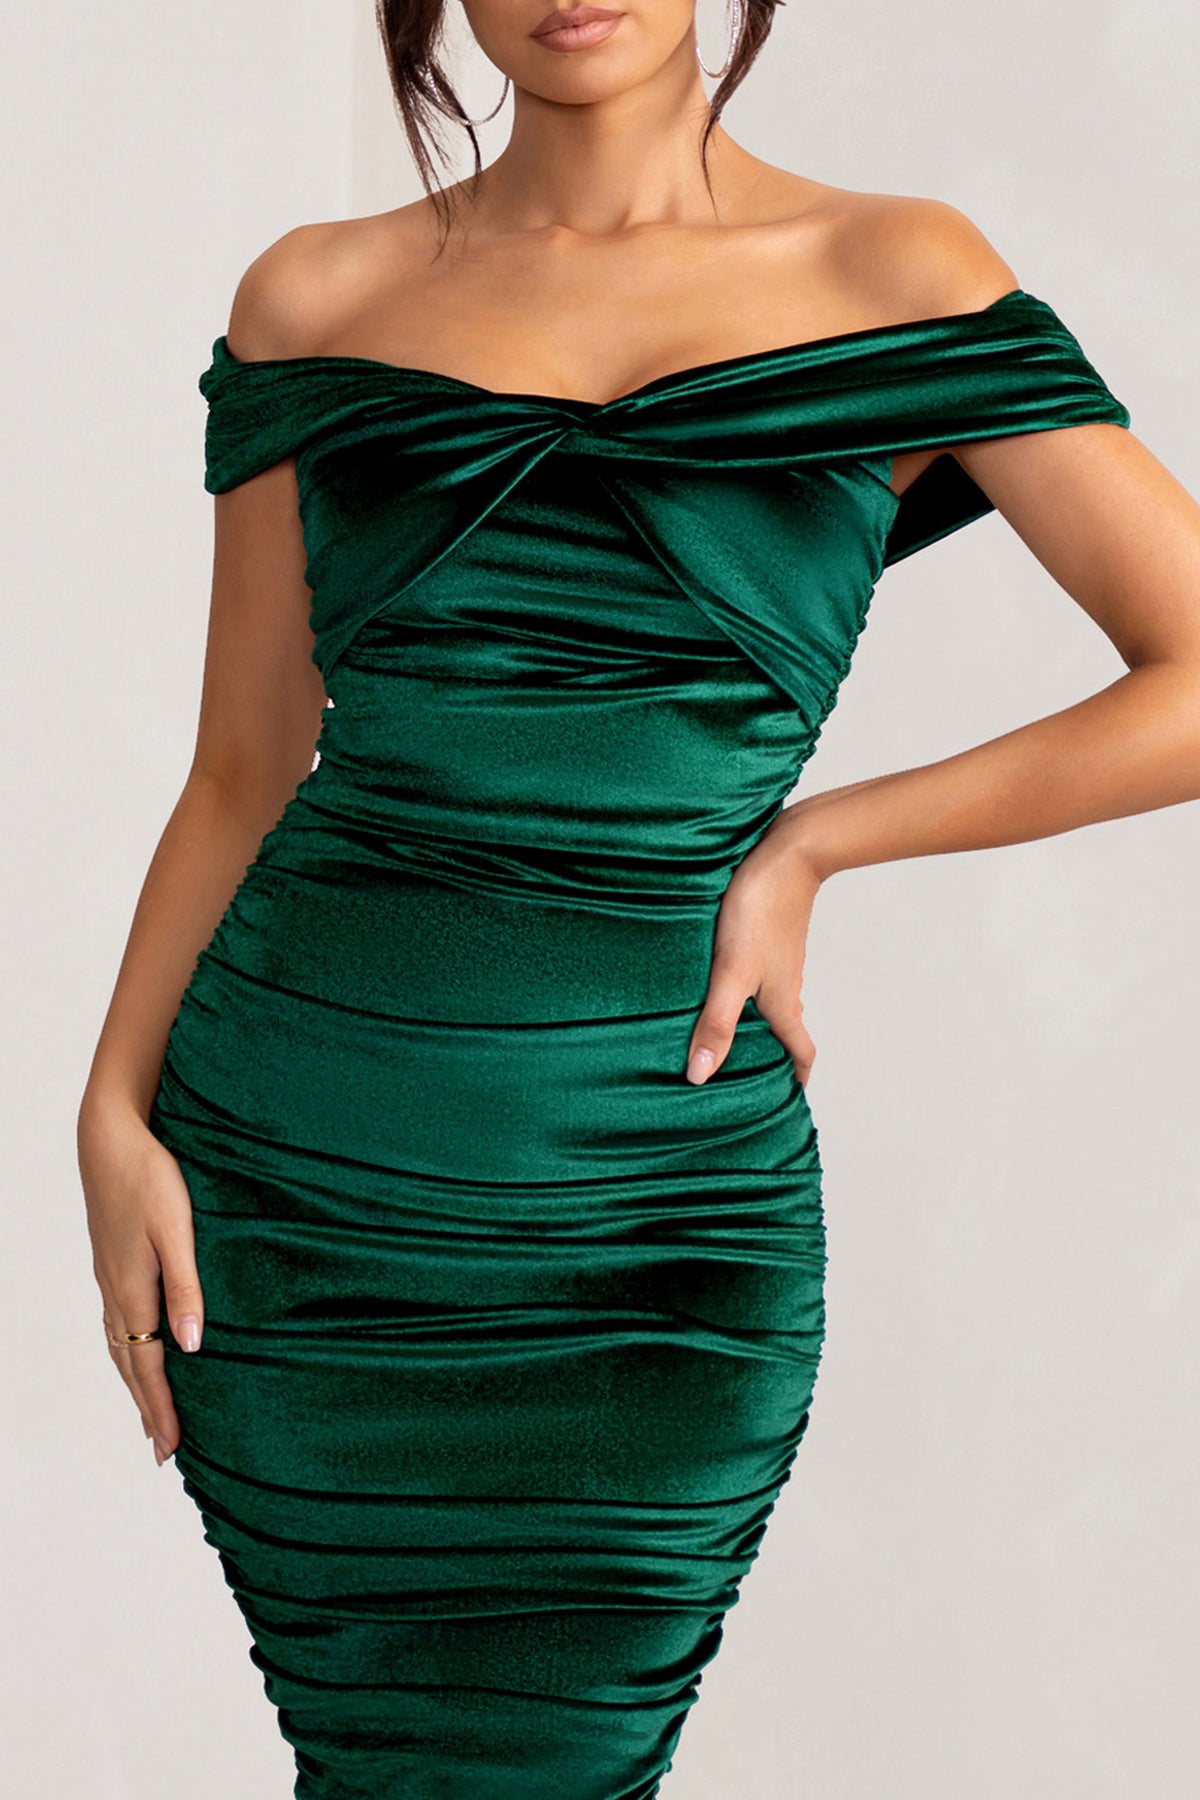 Candies Strapless Dress Green/Black -Medium Suplice Skirt Built in